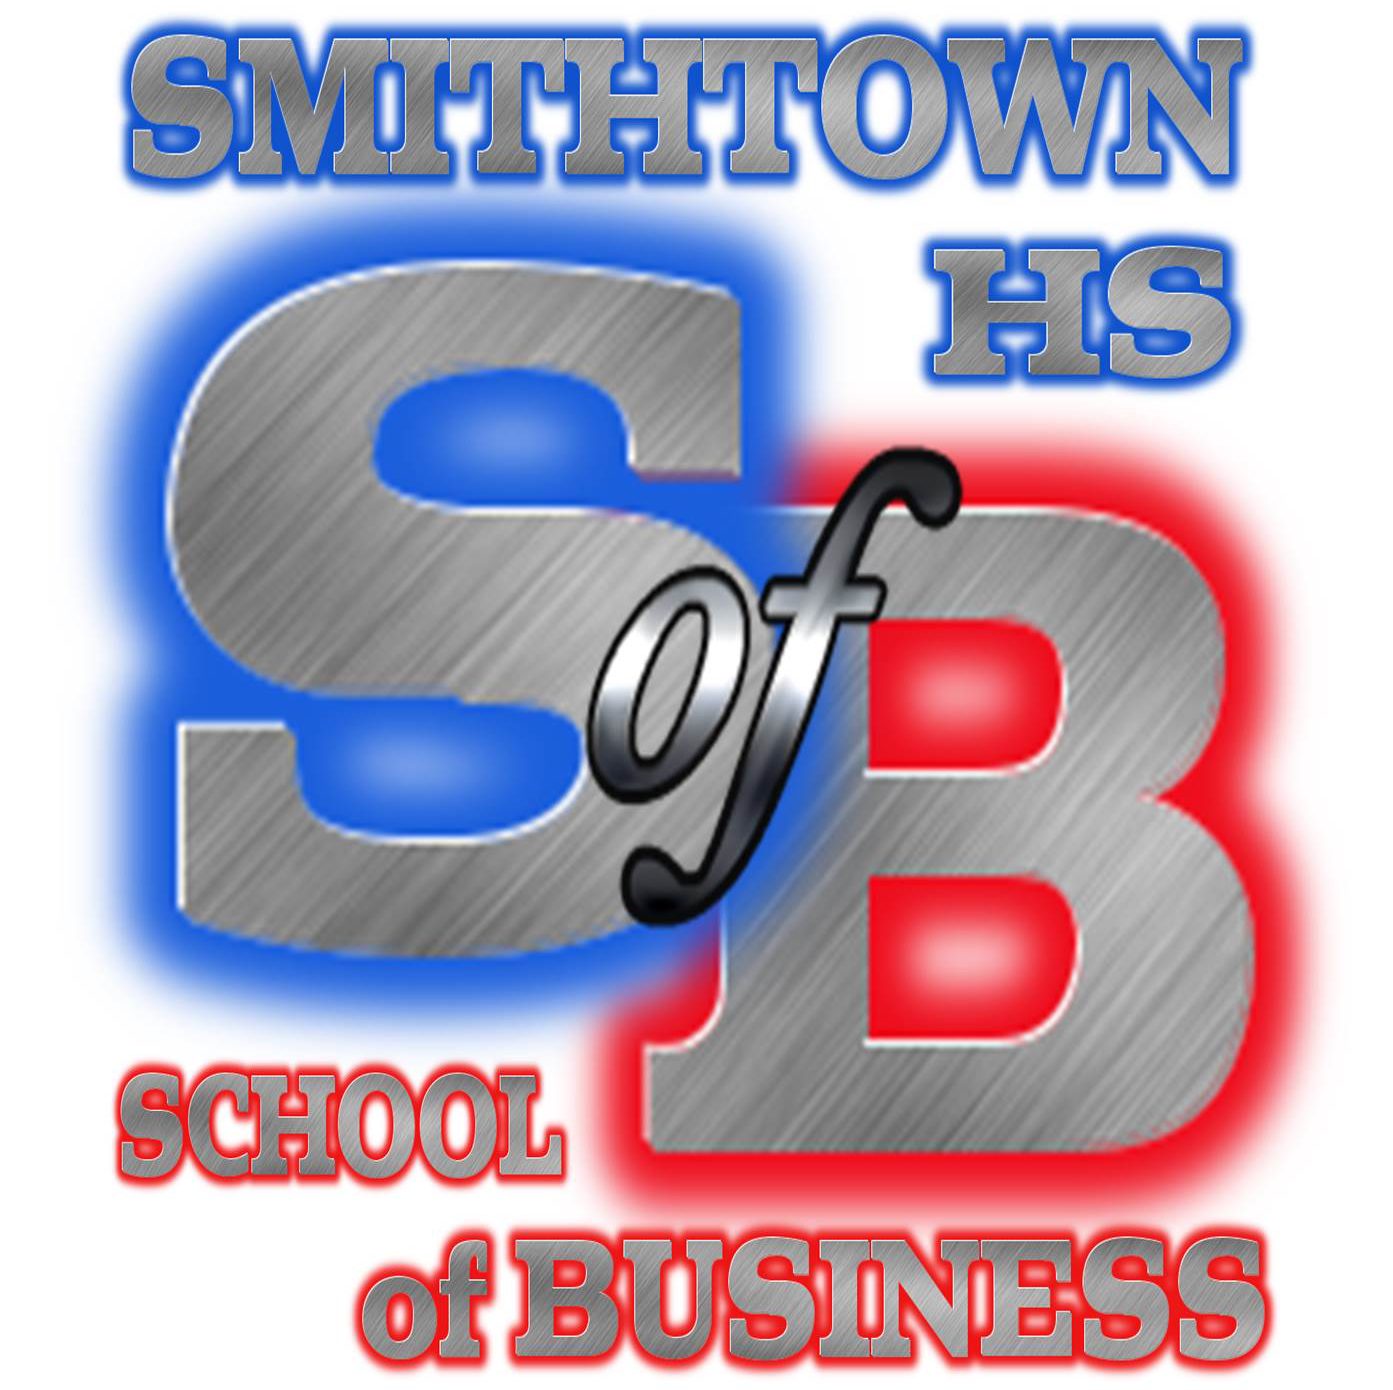 Smithtown High School School of Business